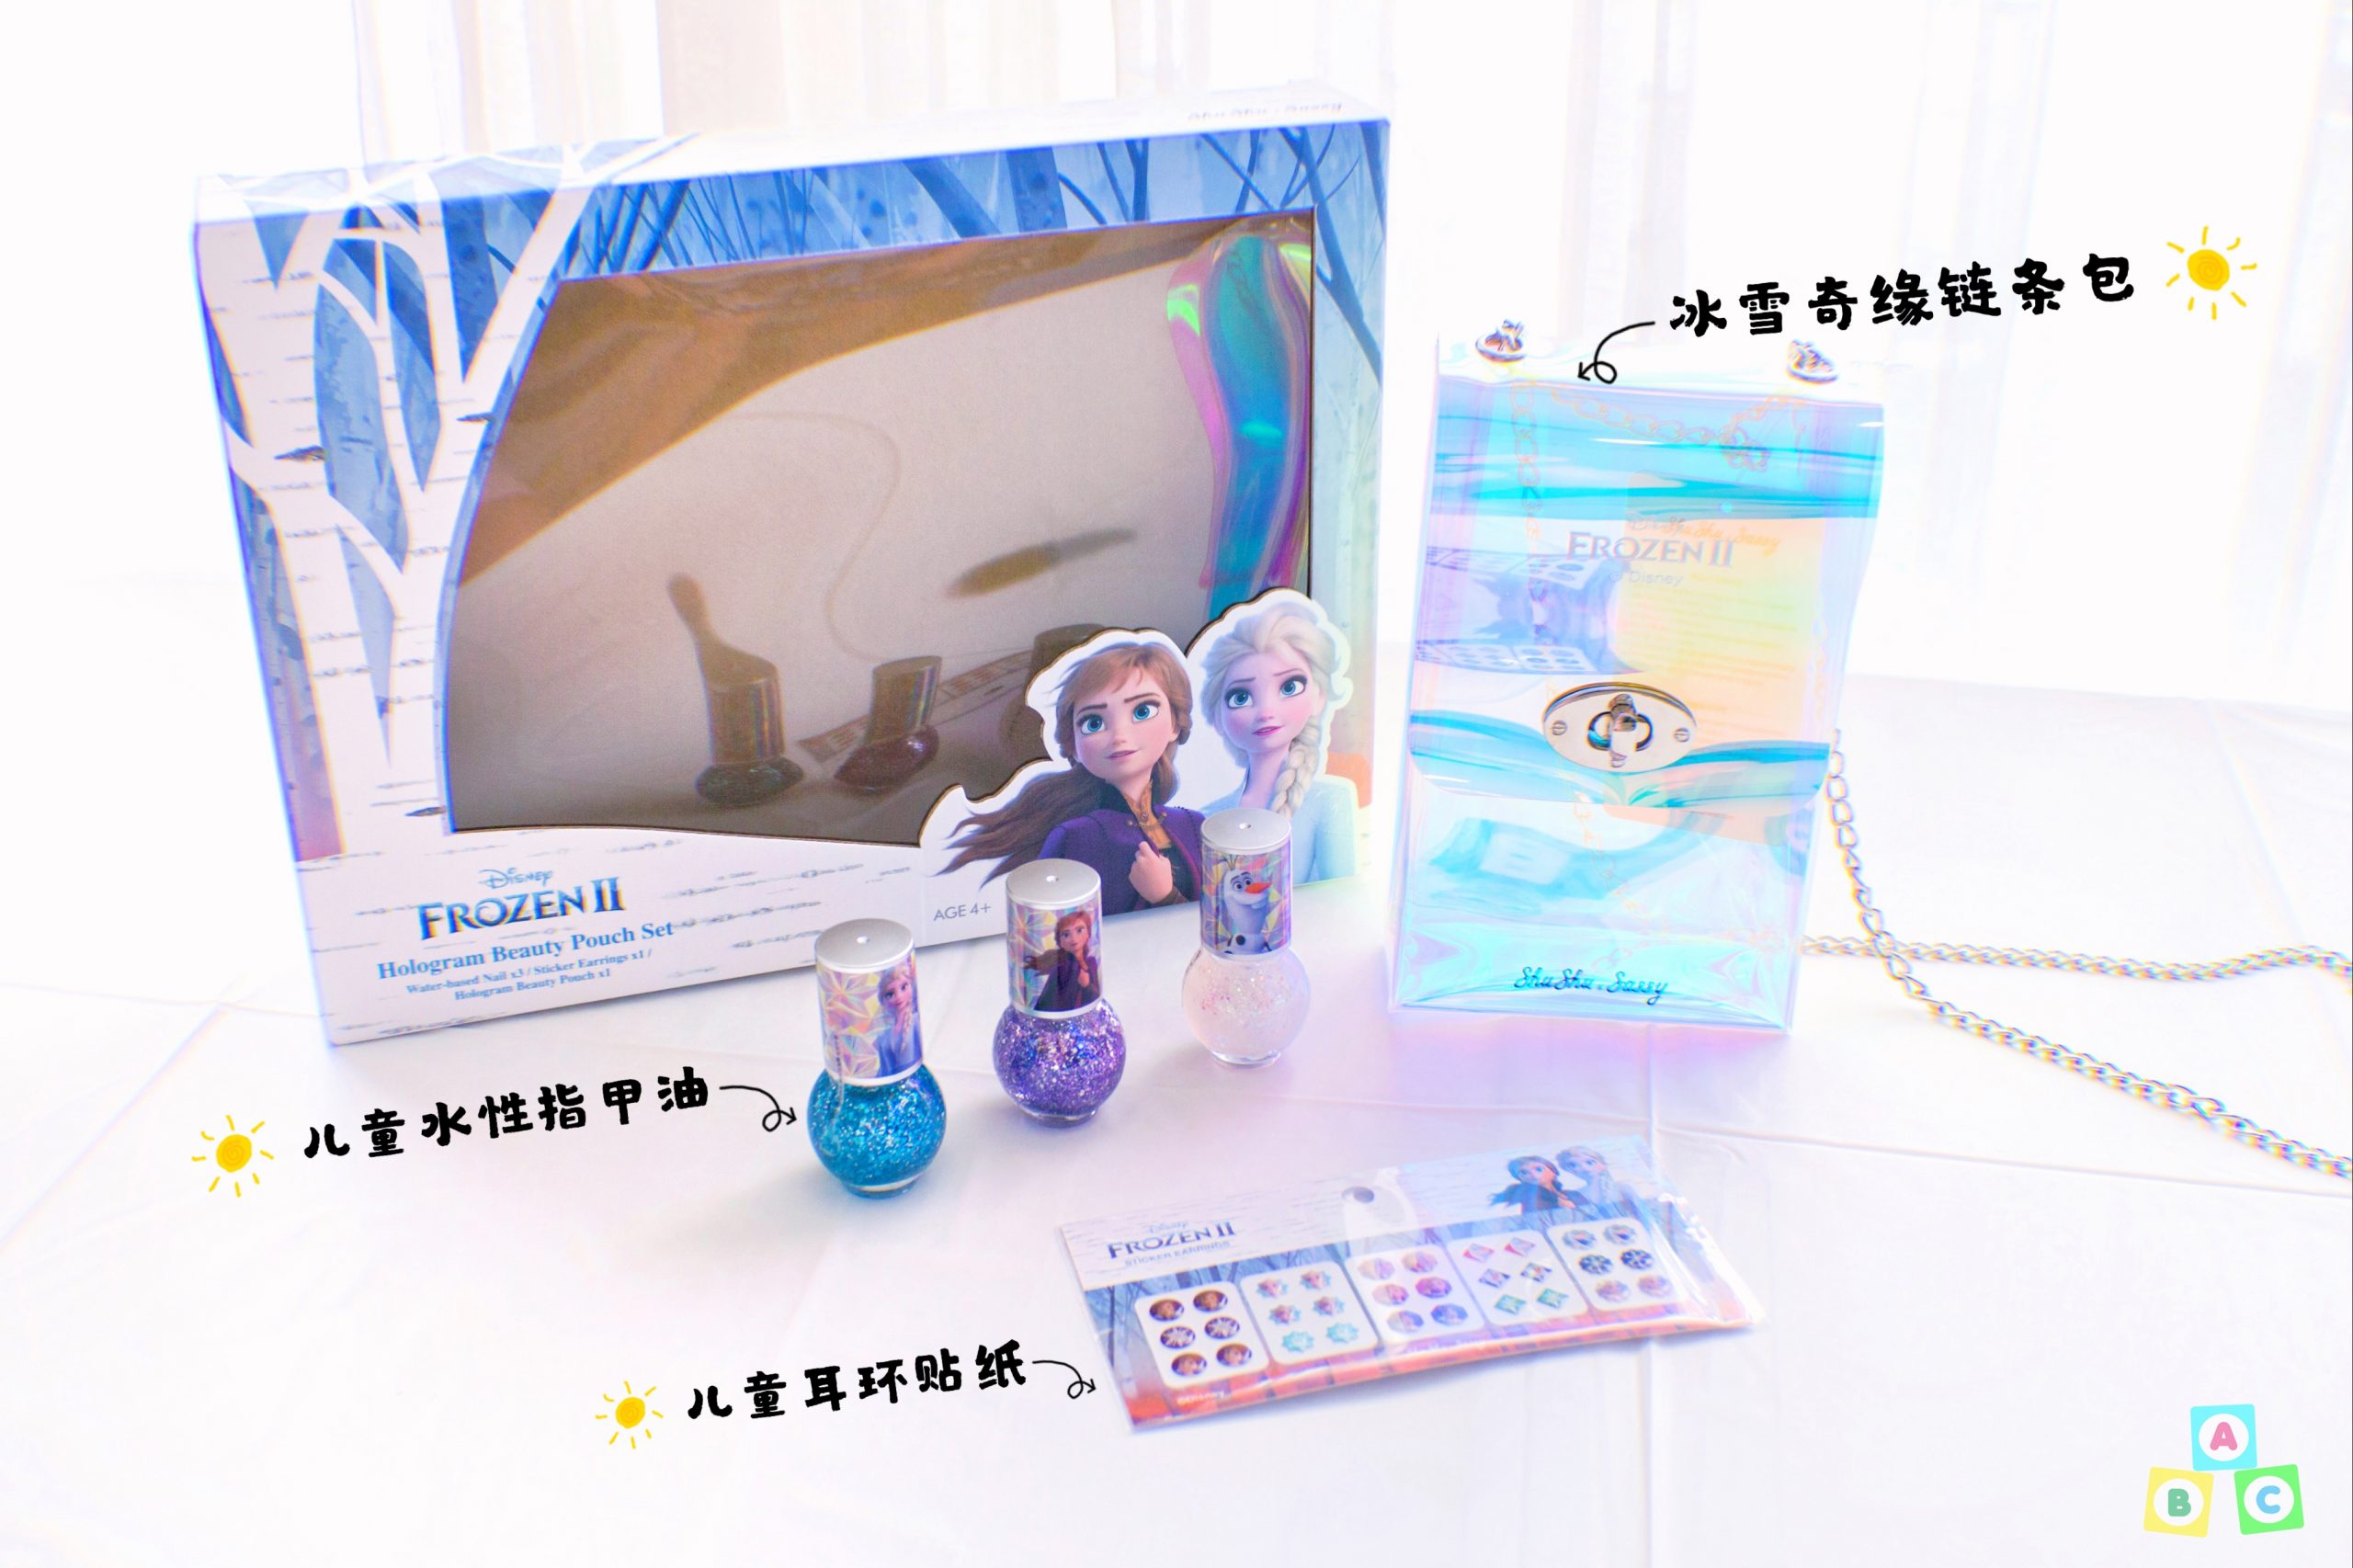 Shushu Sassy Frozen 2 Hologram Beauty Pouch Set